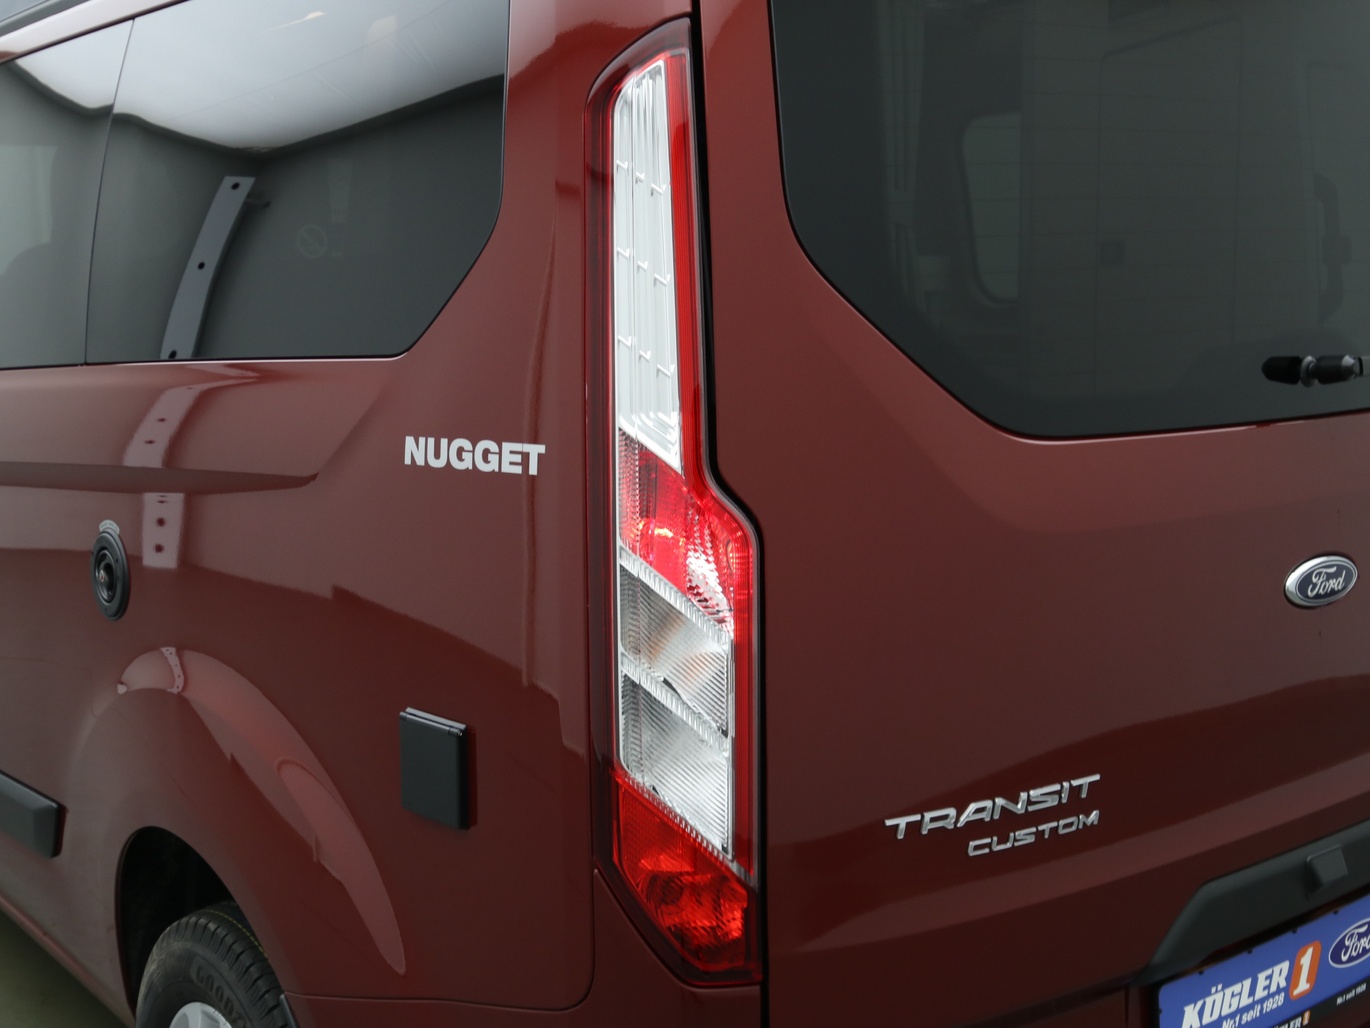  Ford Transit Nugget Aufstelldach 185PS Aut. in Dunkel Karmin Rot 